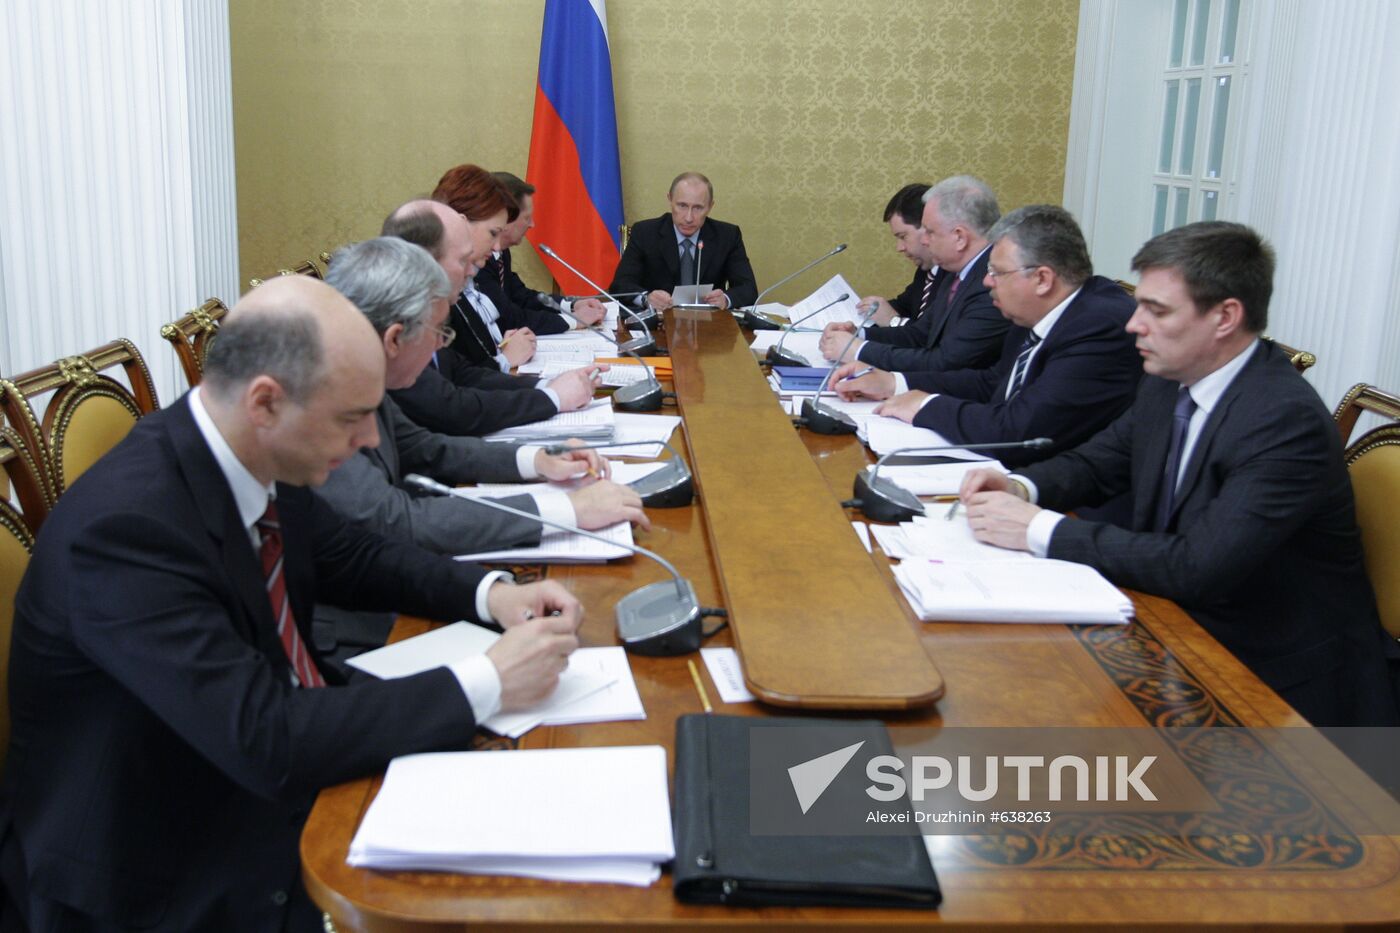 Vladimir Putin chairs meeting in Sochi